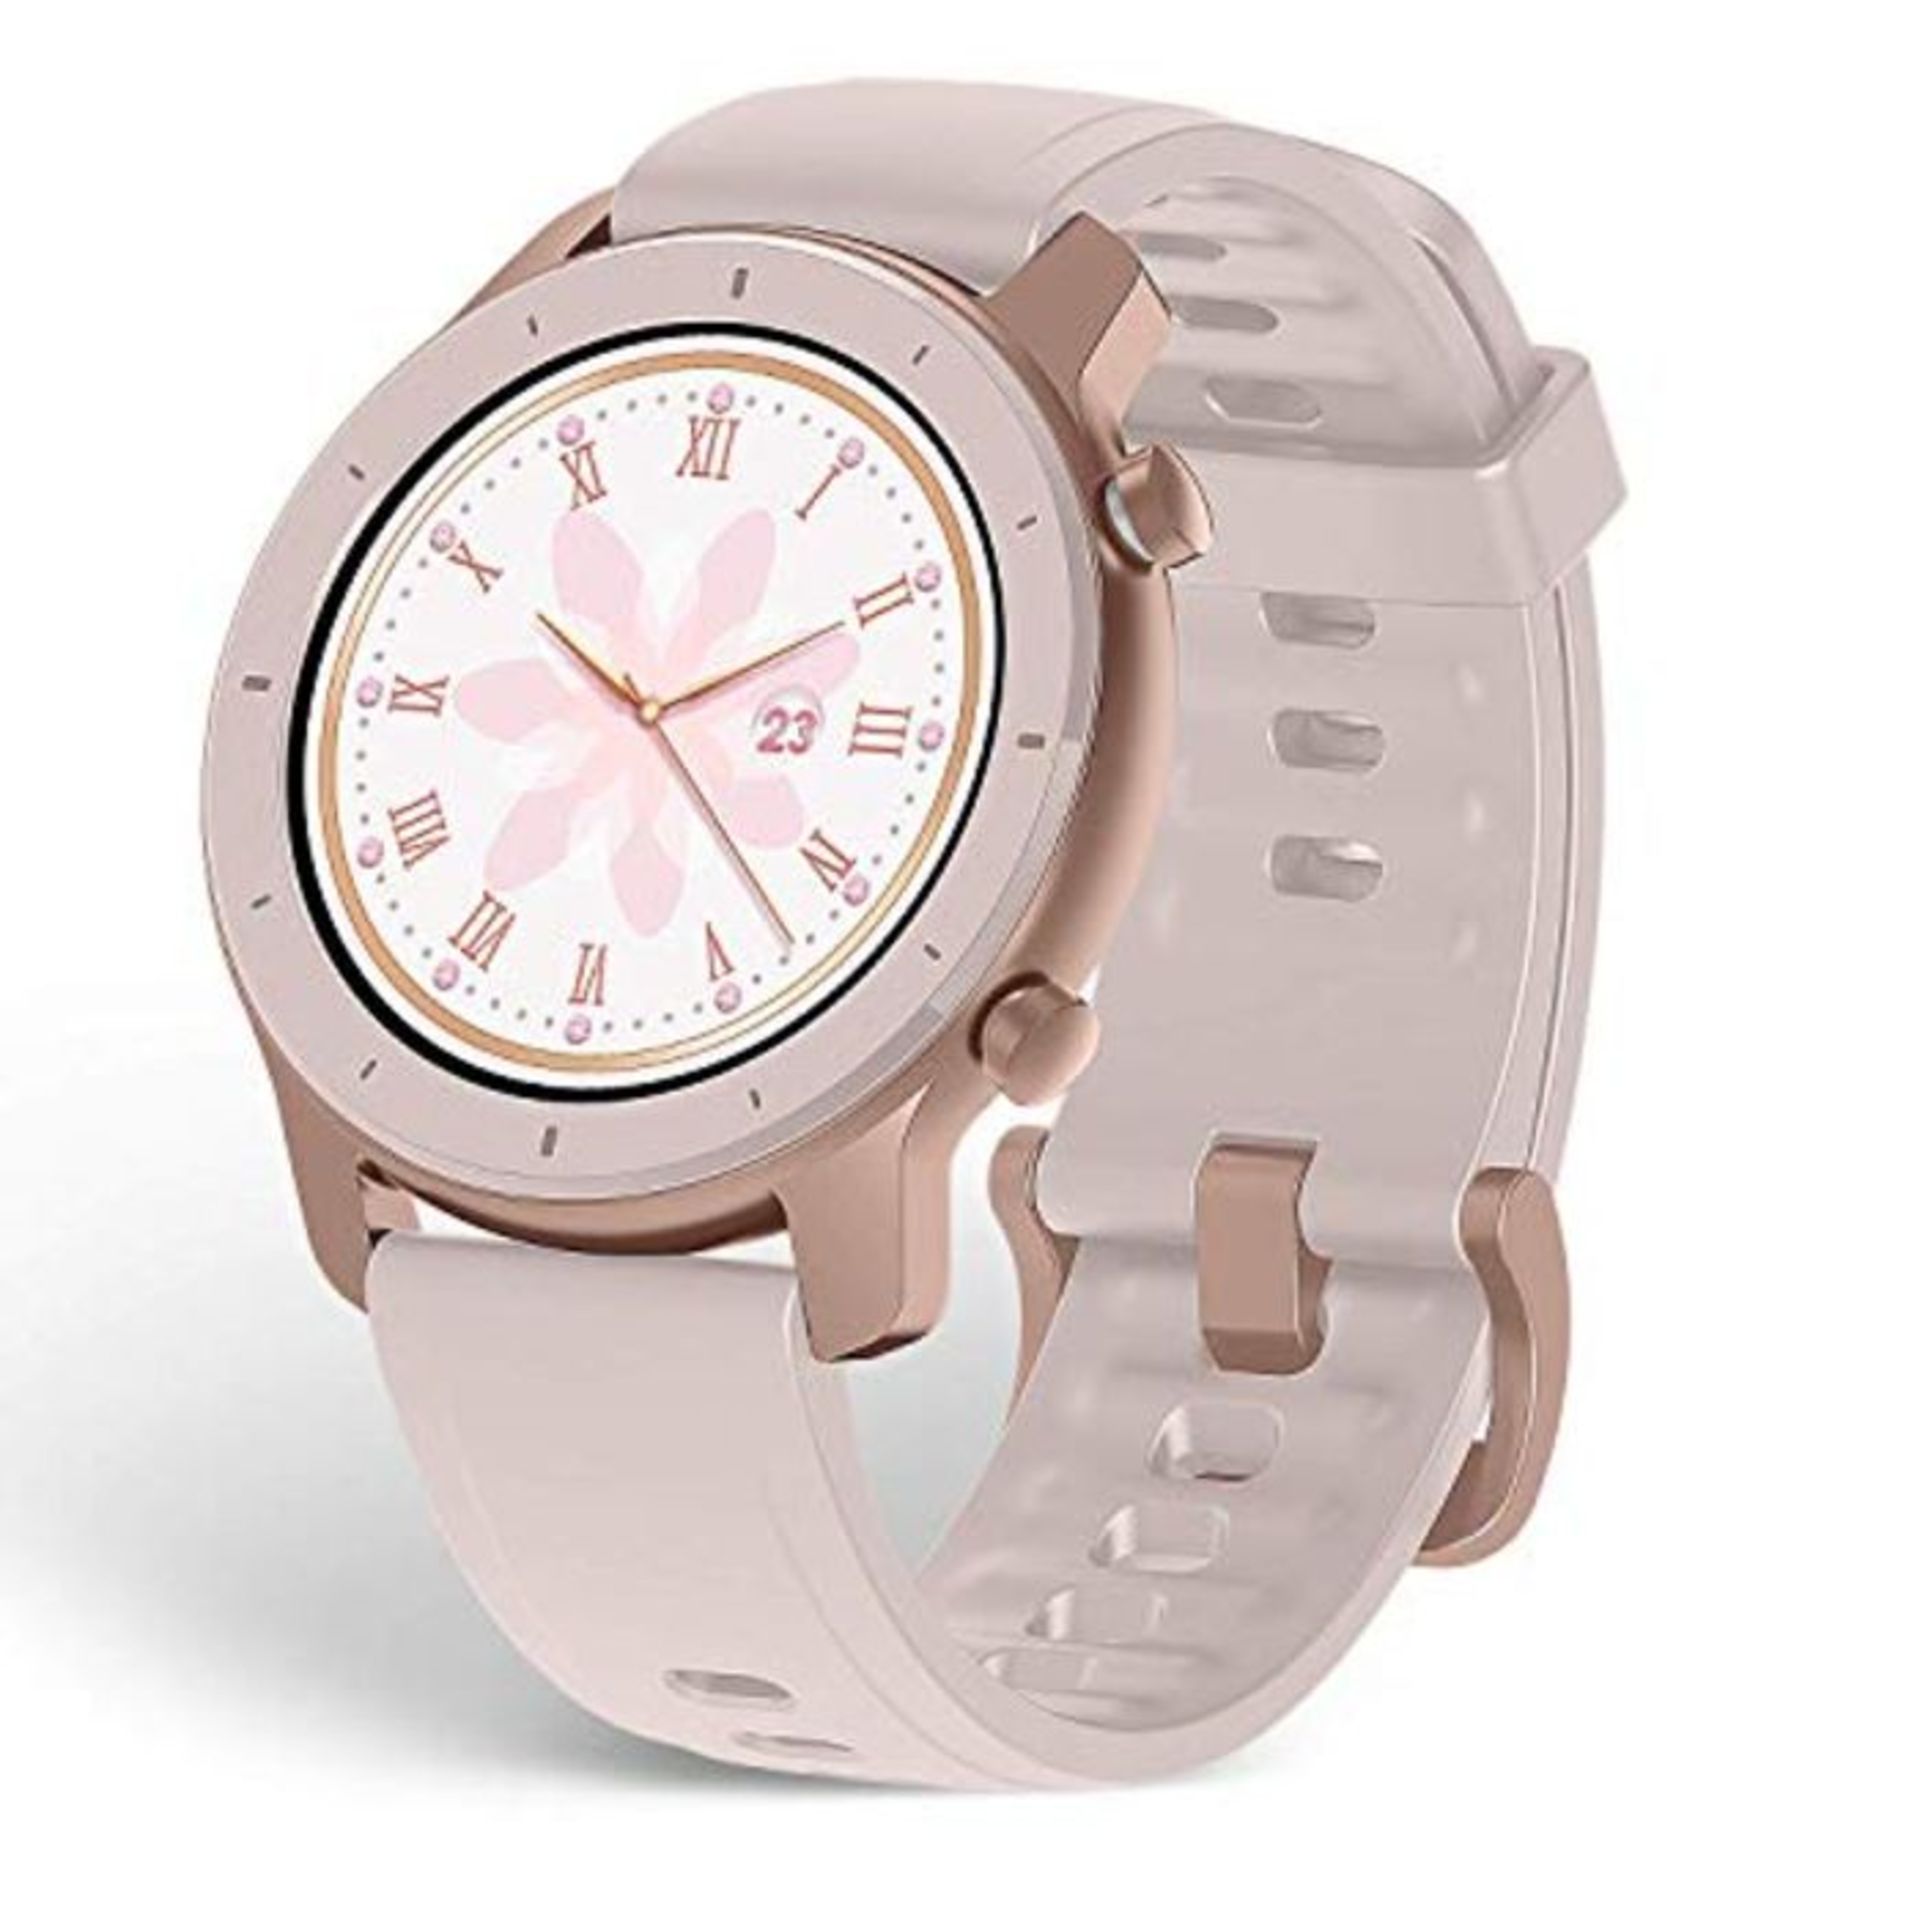 RRP £83.00 Amazfit GTR - Ultra-Modern Smartwatch - Cherry Blossom Pink